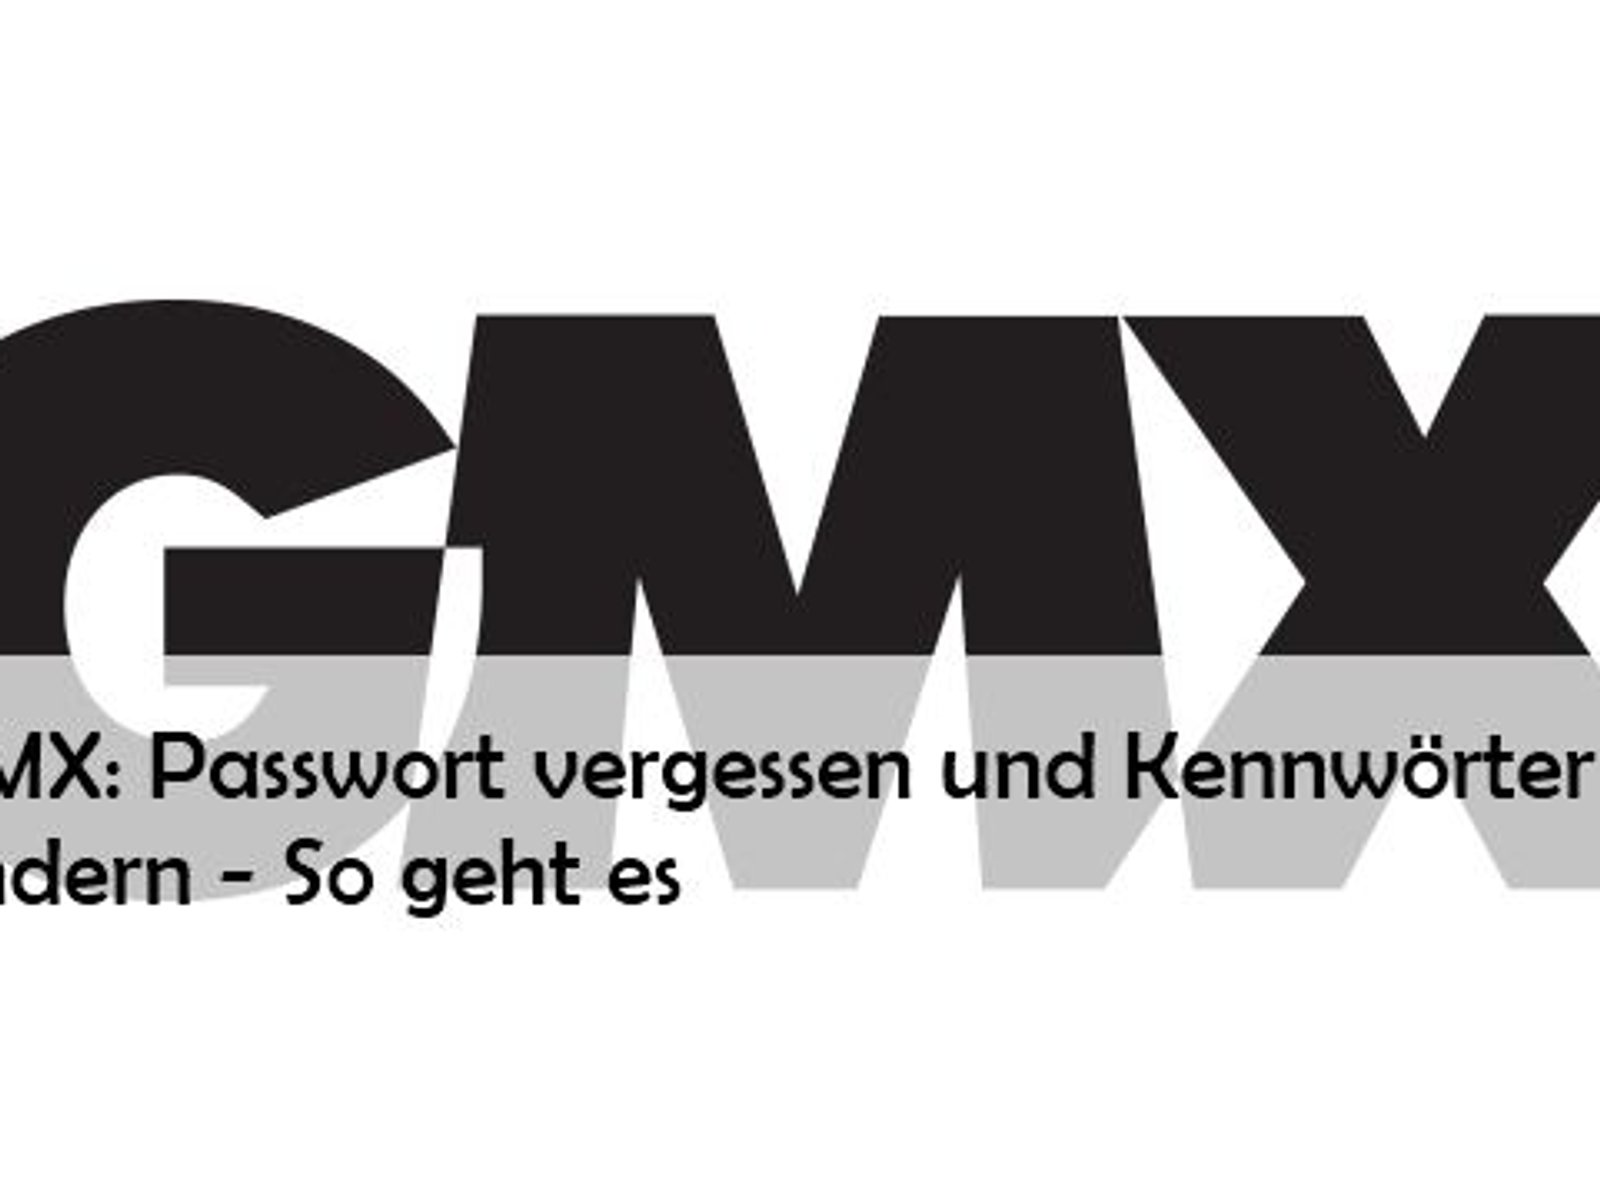 Gmx login probleme passwort